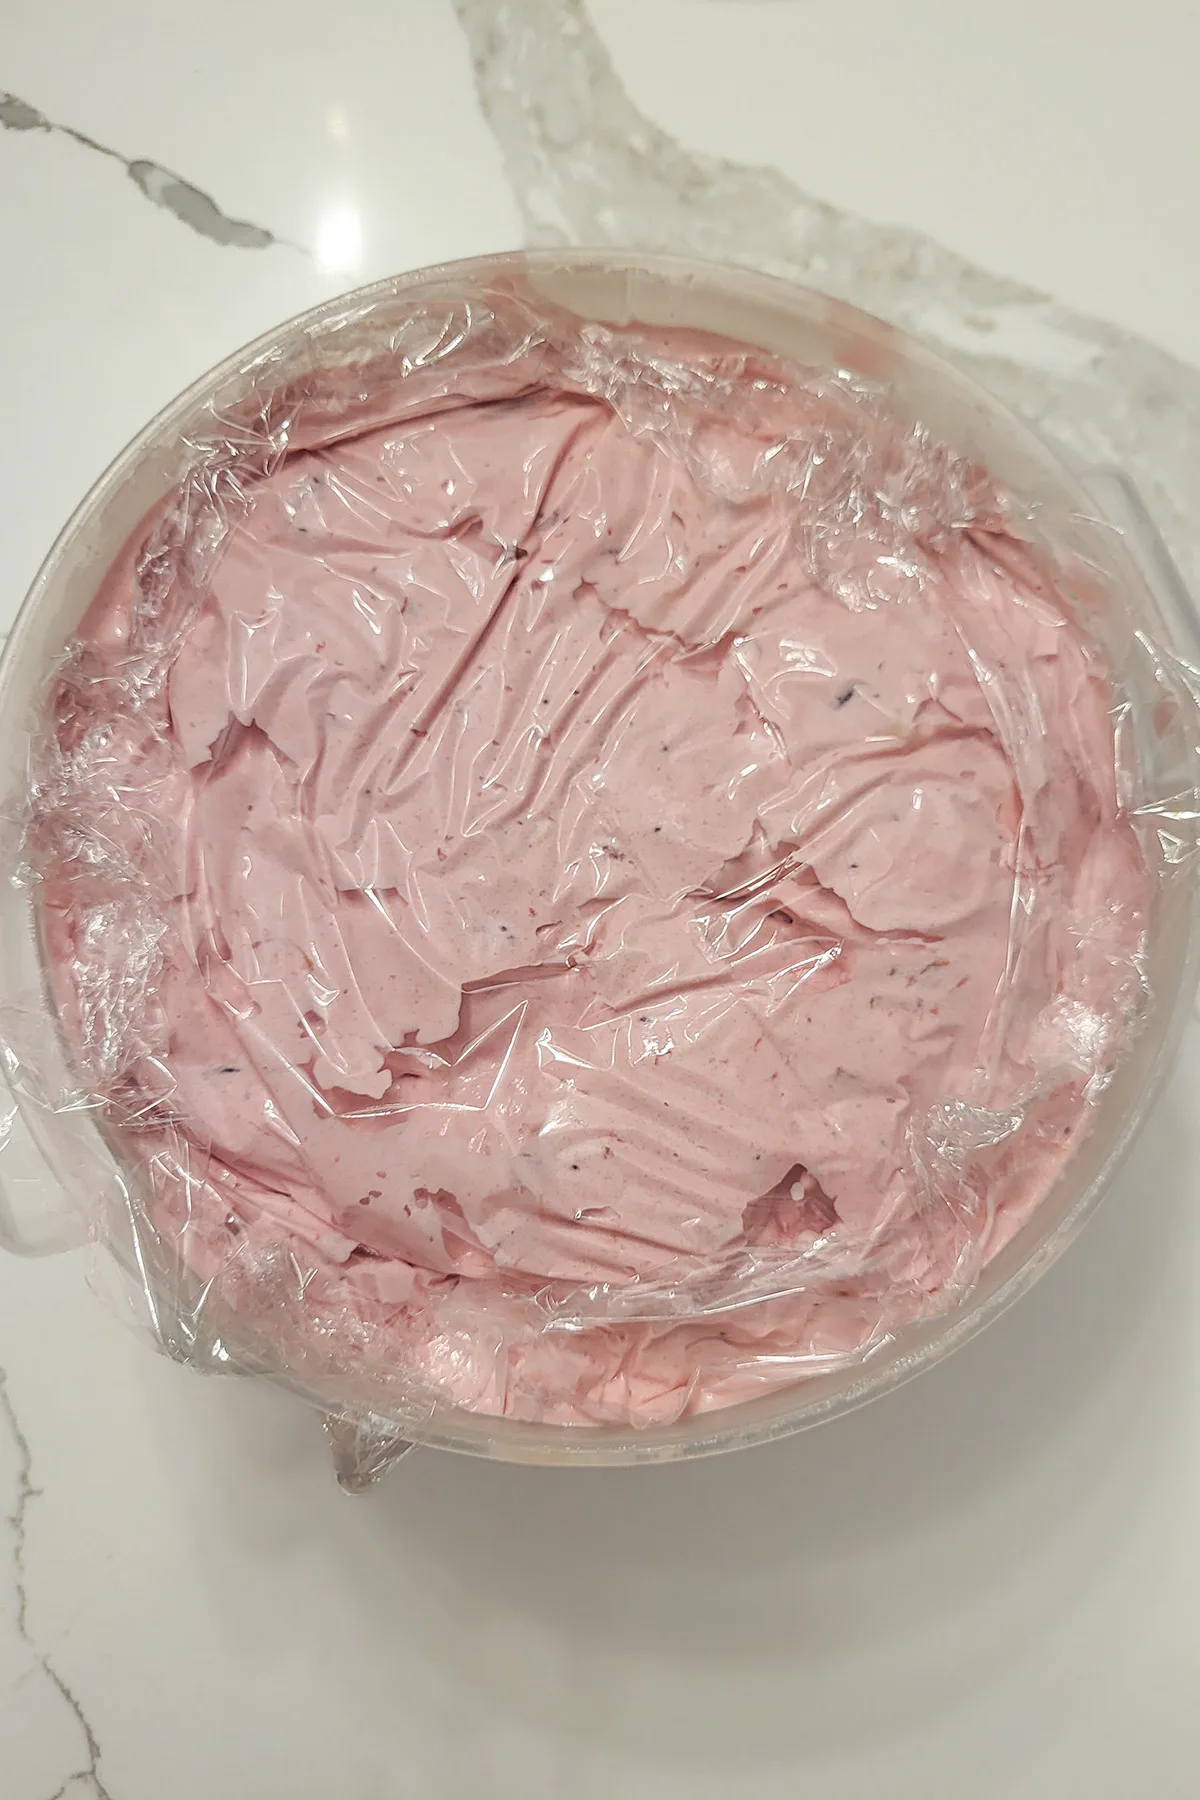 a plastic bucket of cranberry ice cream.